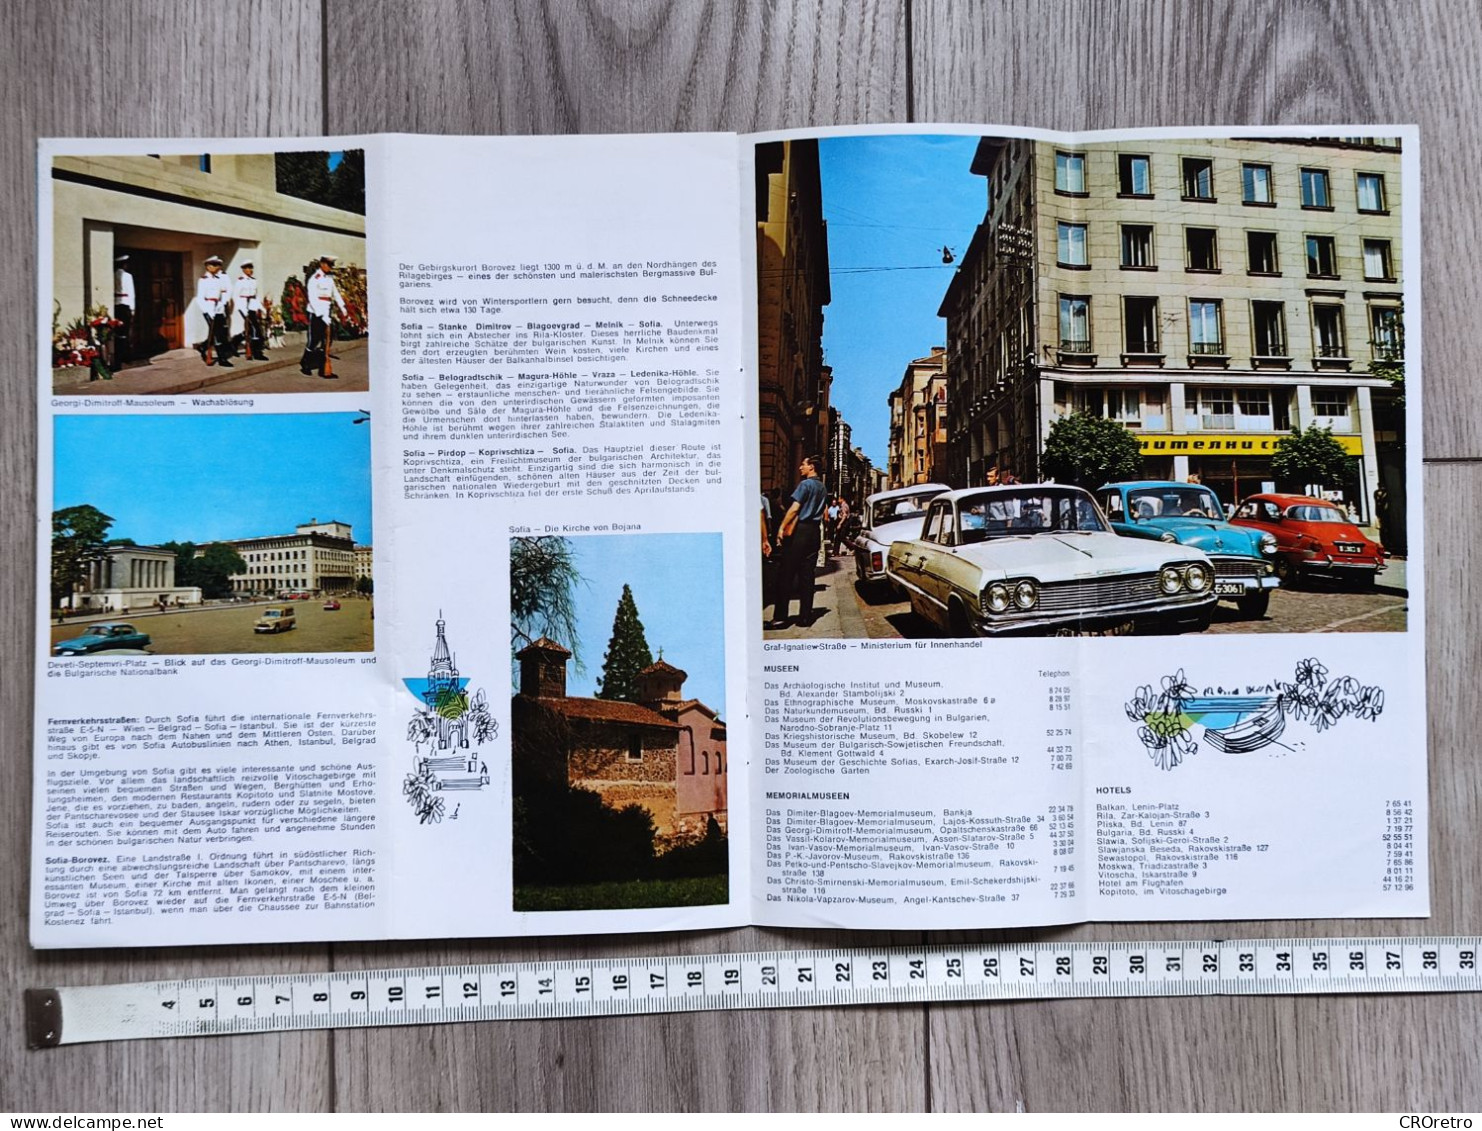 SOFIA - BULGARIA, vintage tourism brochure, prospect, guide (pro3)